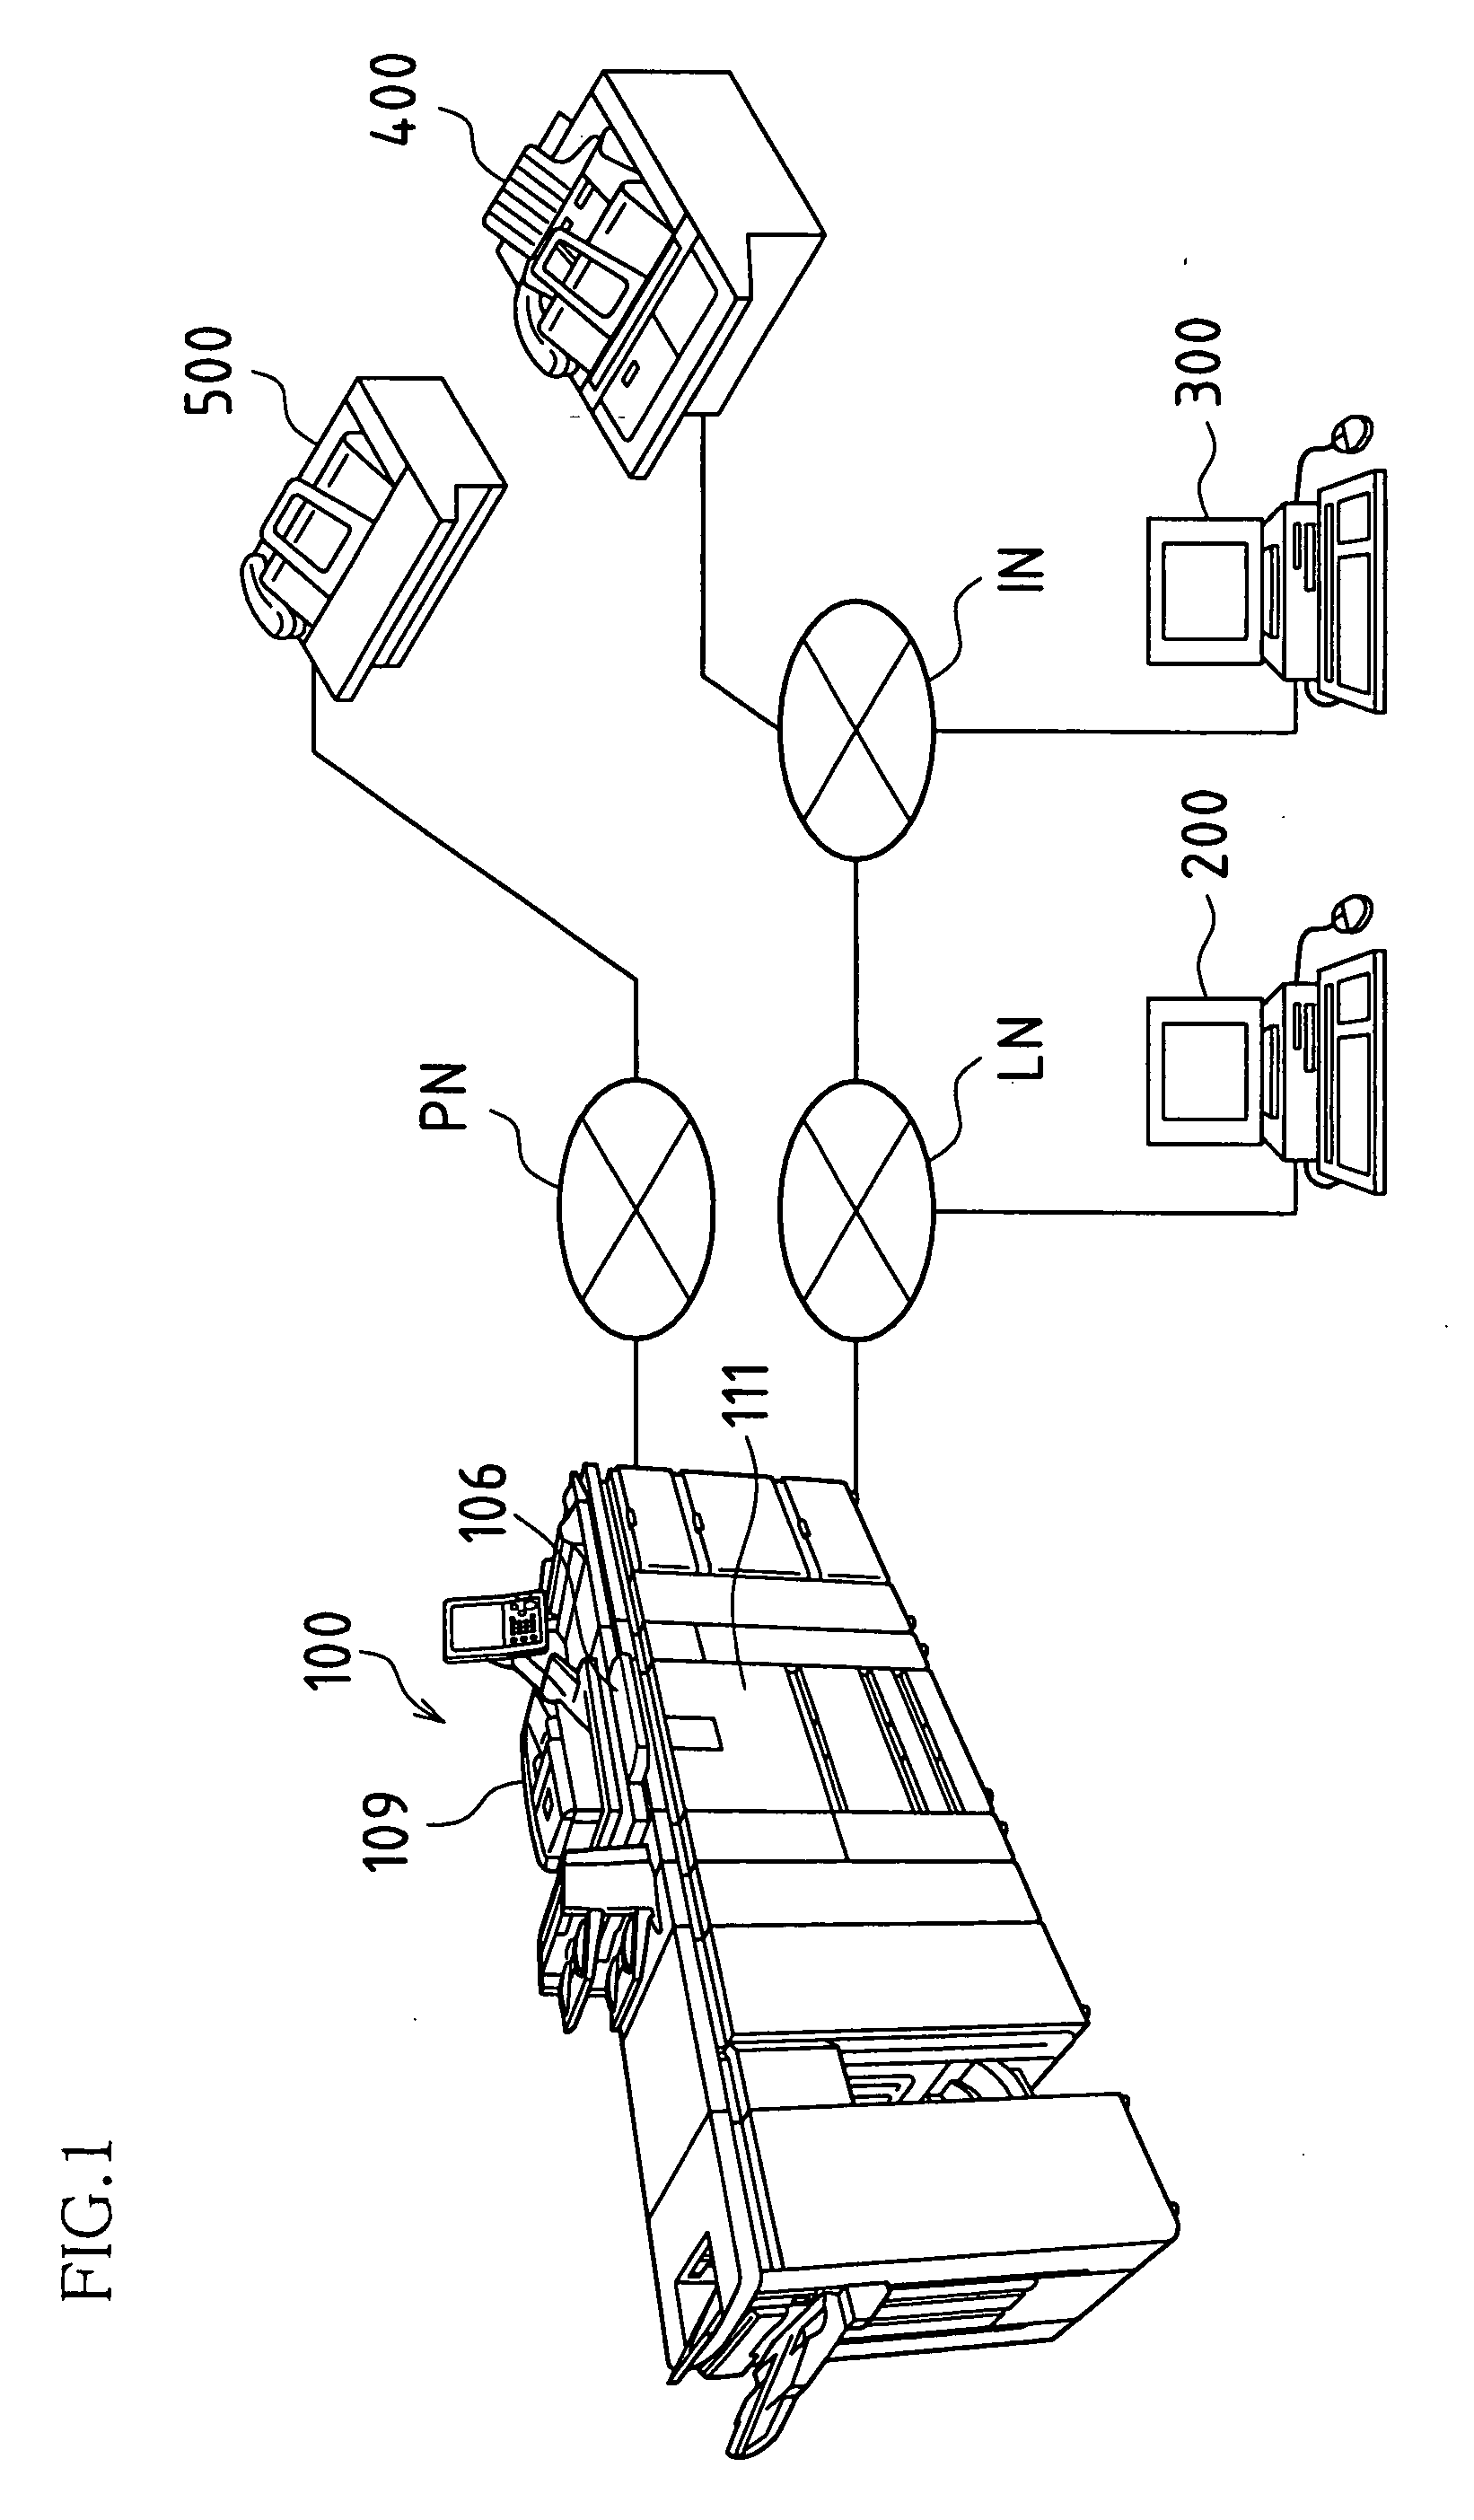 Image processing apparatus,image forming apparatus, and image sending apparatus